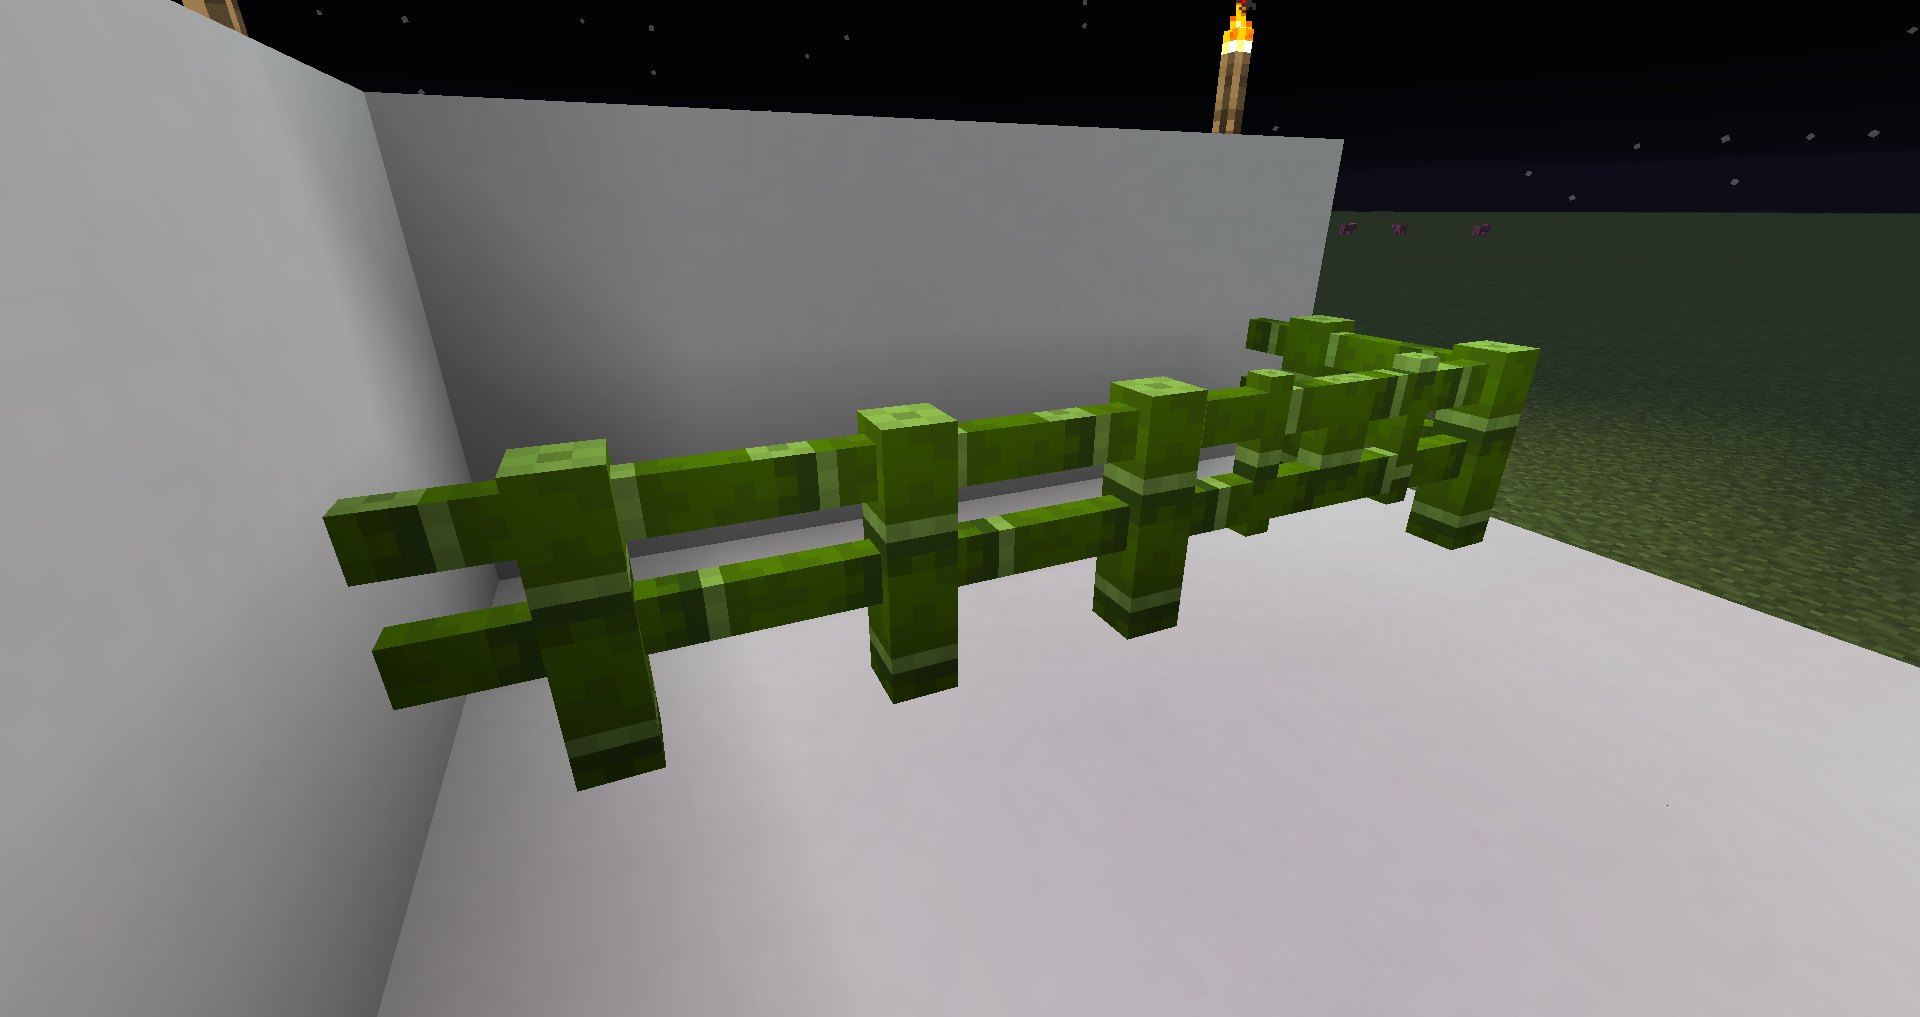 Bamboo Blocks Mod for Minecraft 1.16.5/1.15.2/1.14.4